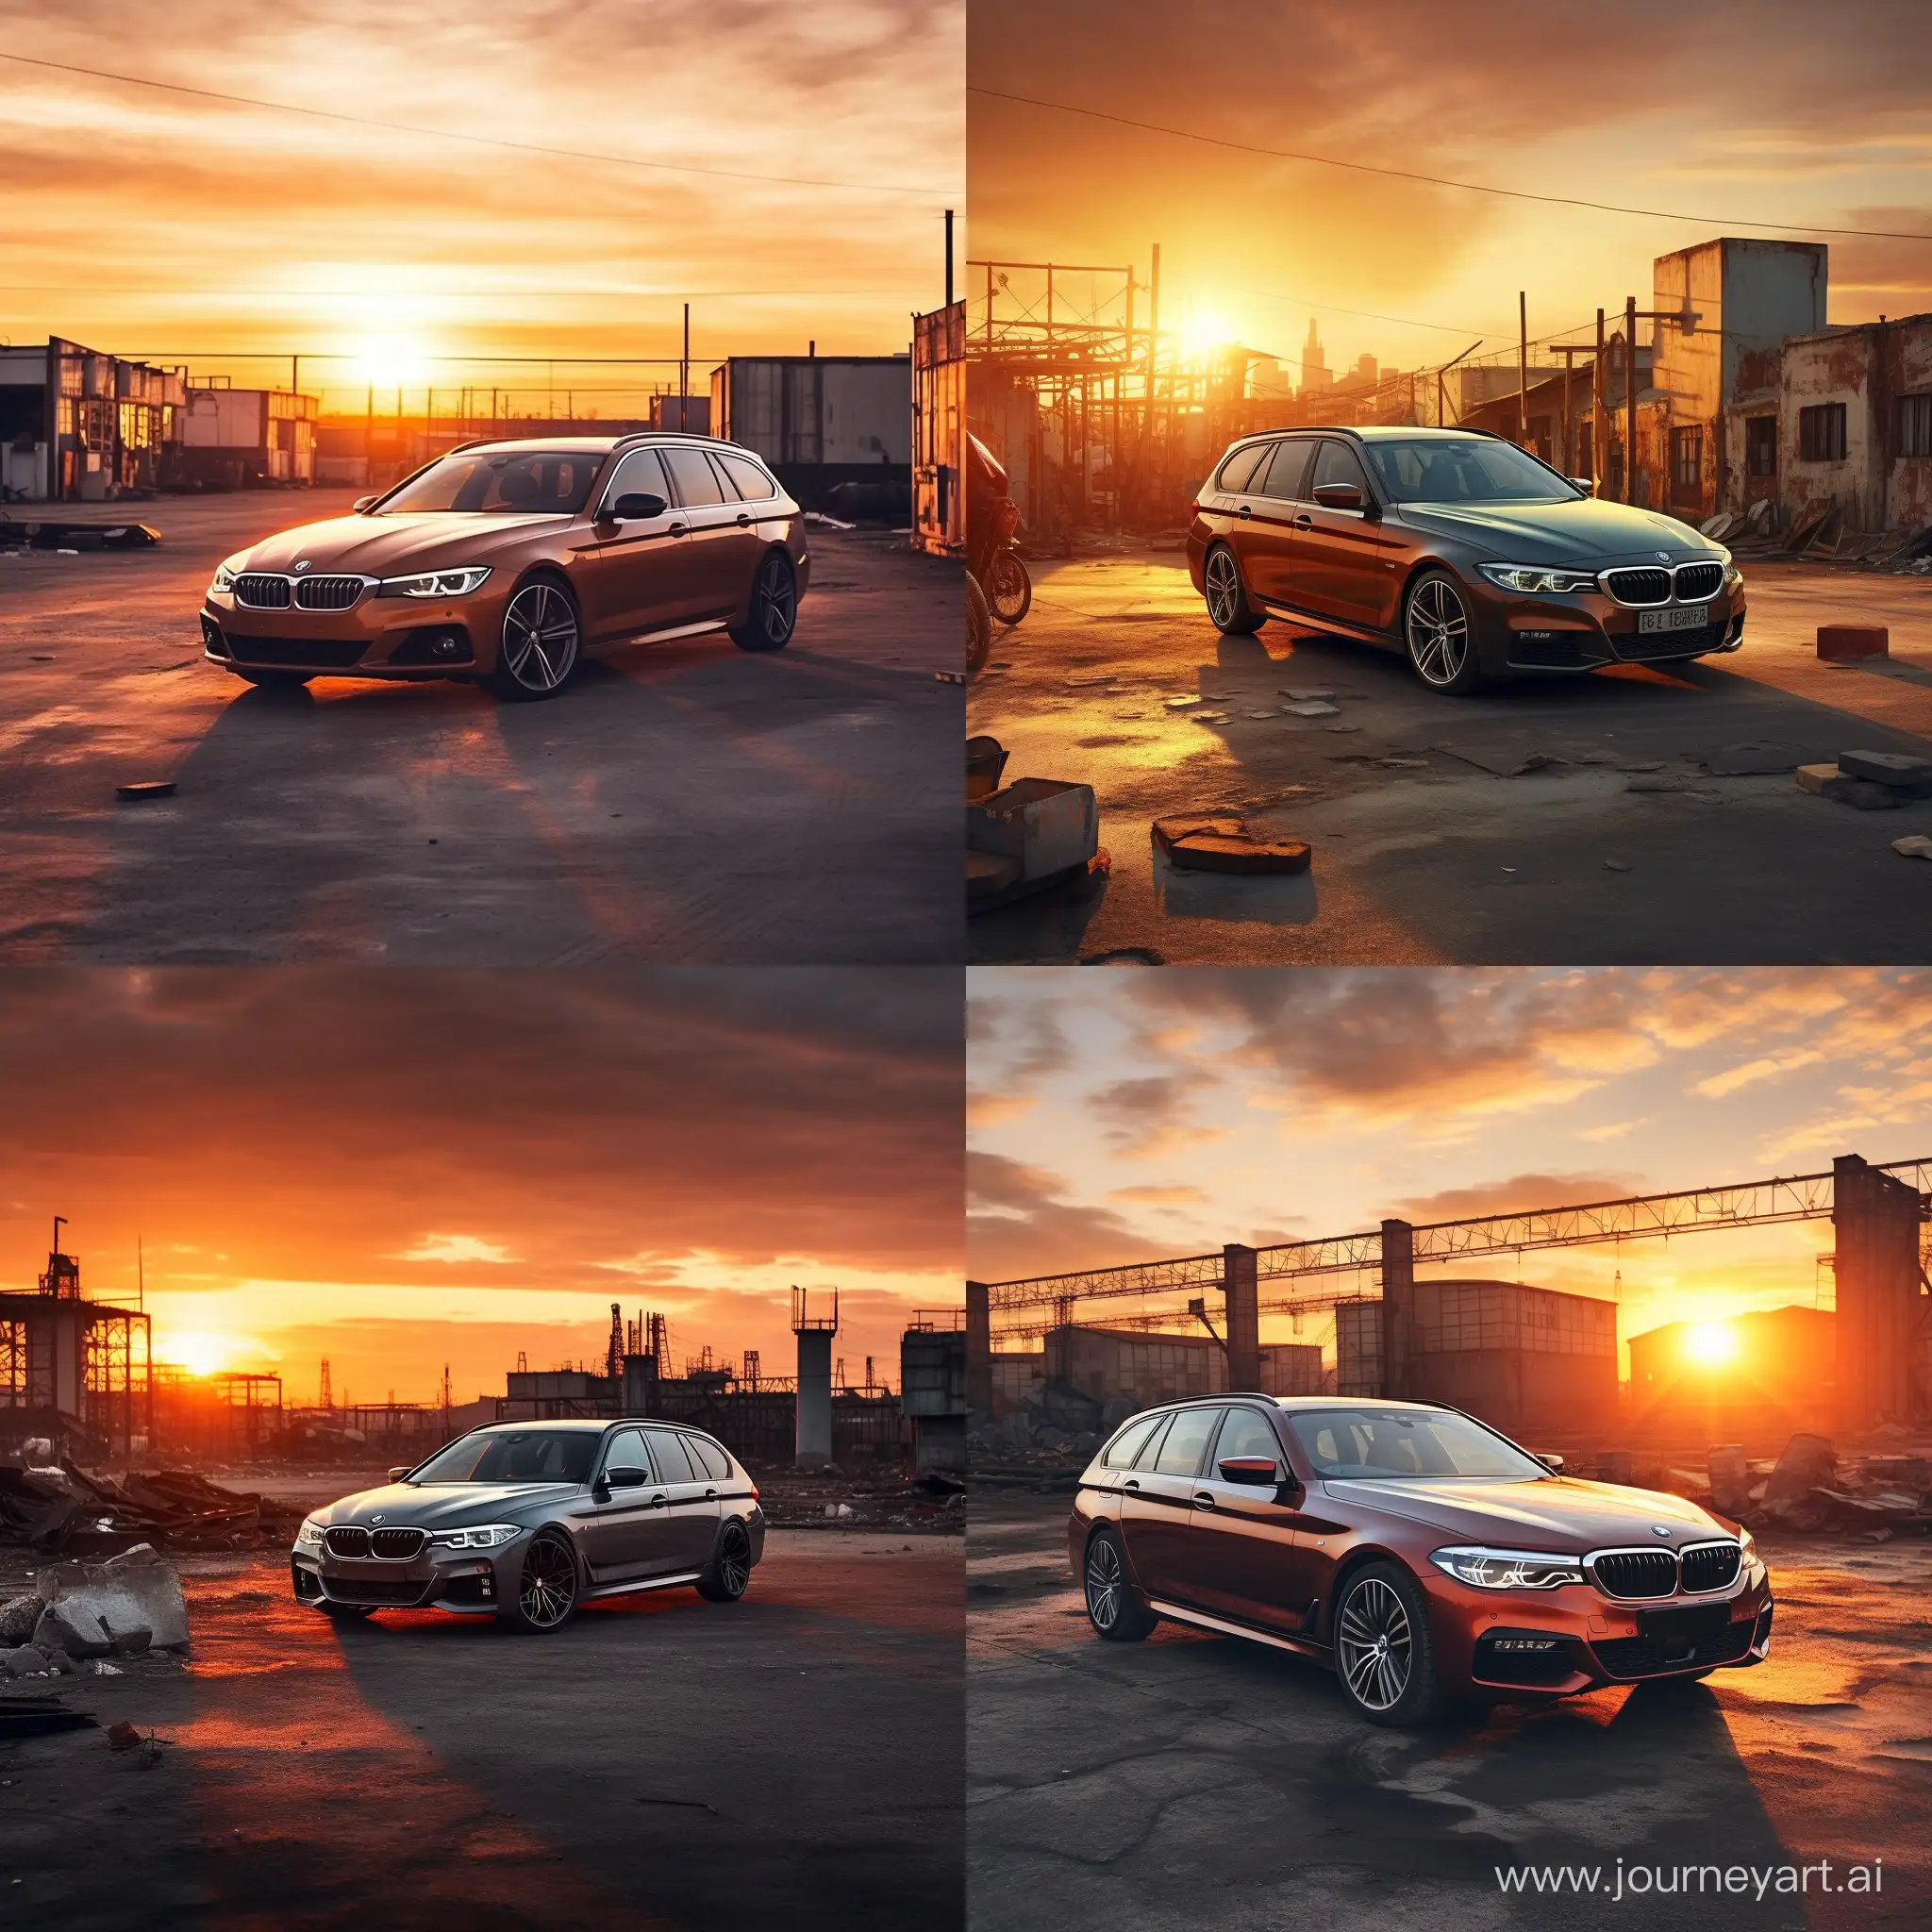  BMW 3er model F31 Kombi bei Sonnenuntergang im Industriegebiet 